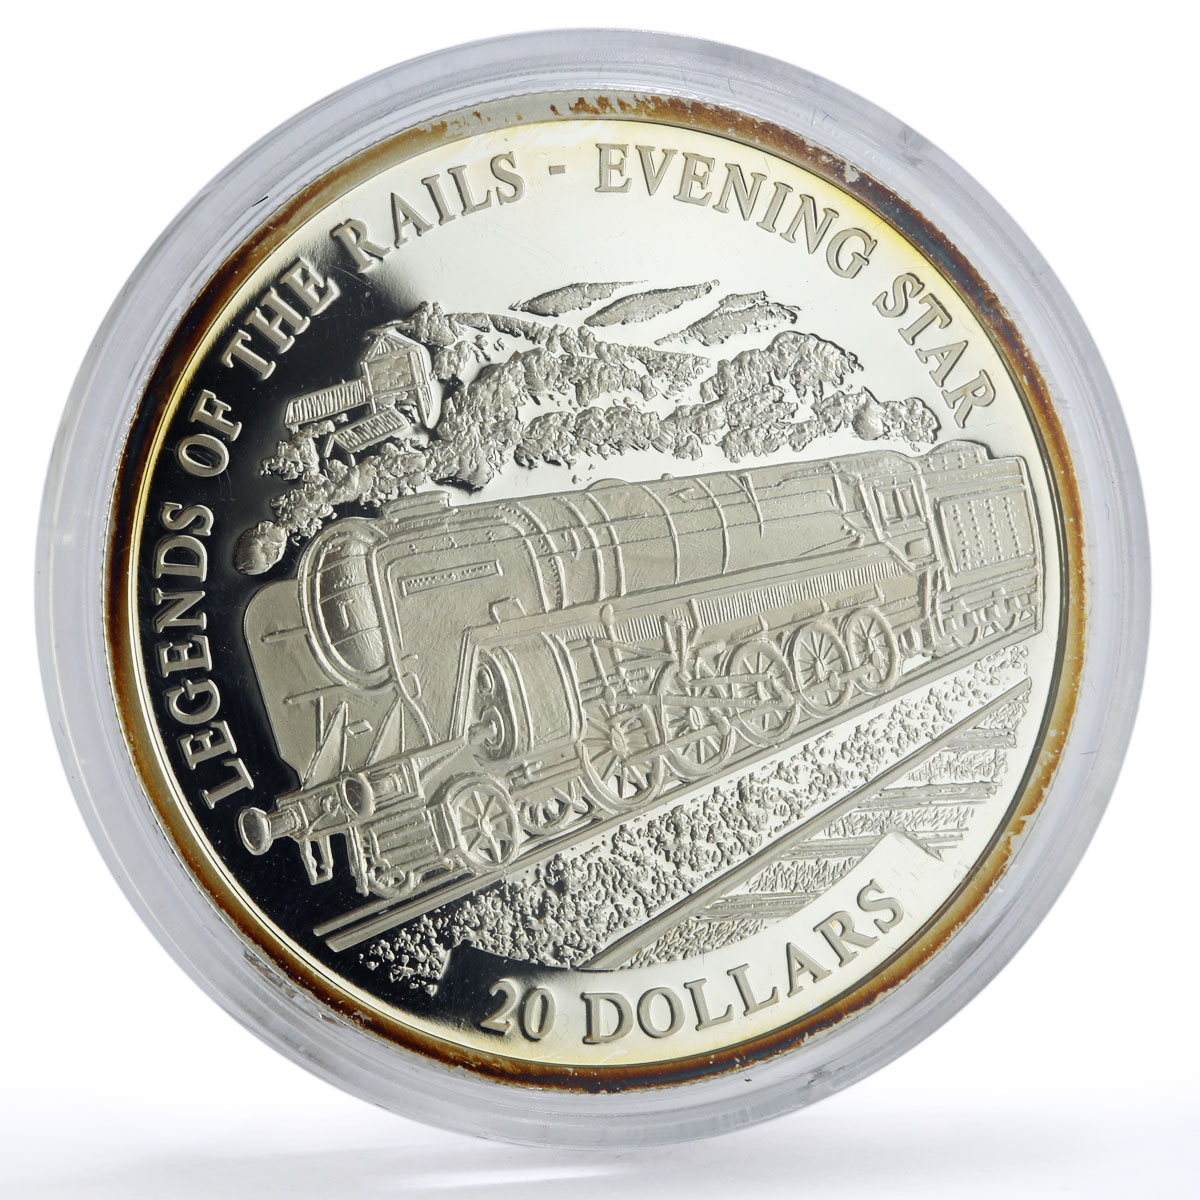 Liberia 20 dollars Trains Railway Locomotive Evening Star silver coin 2001